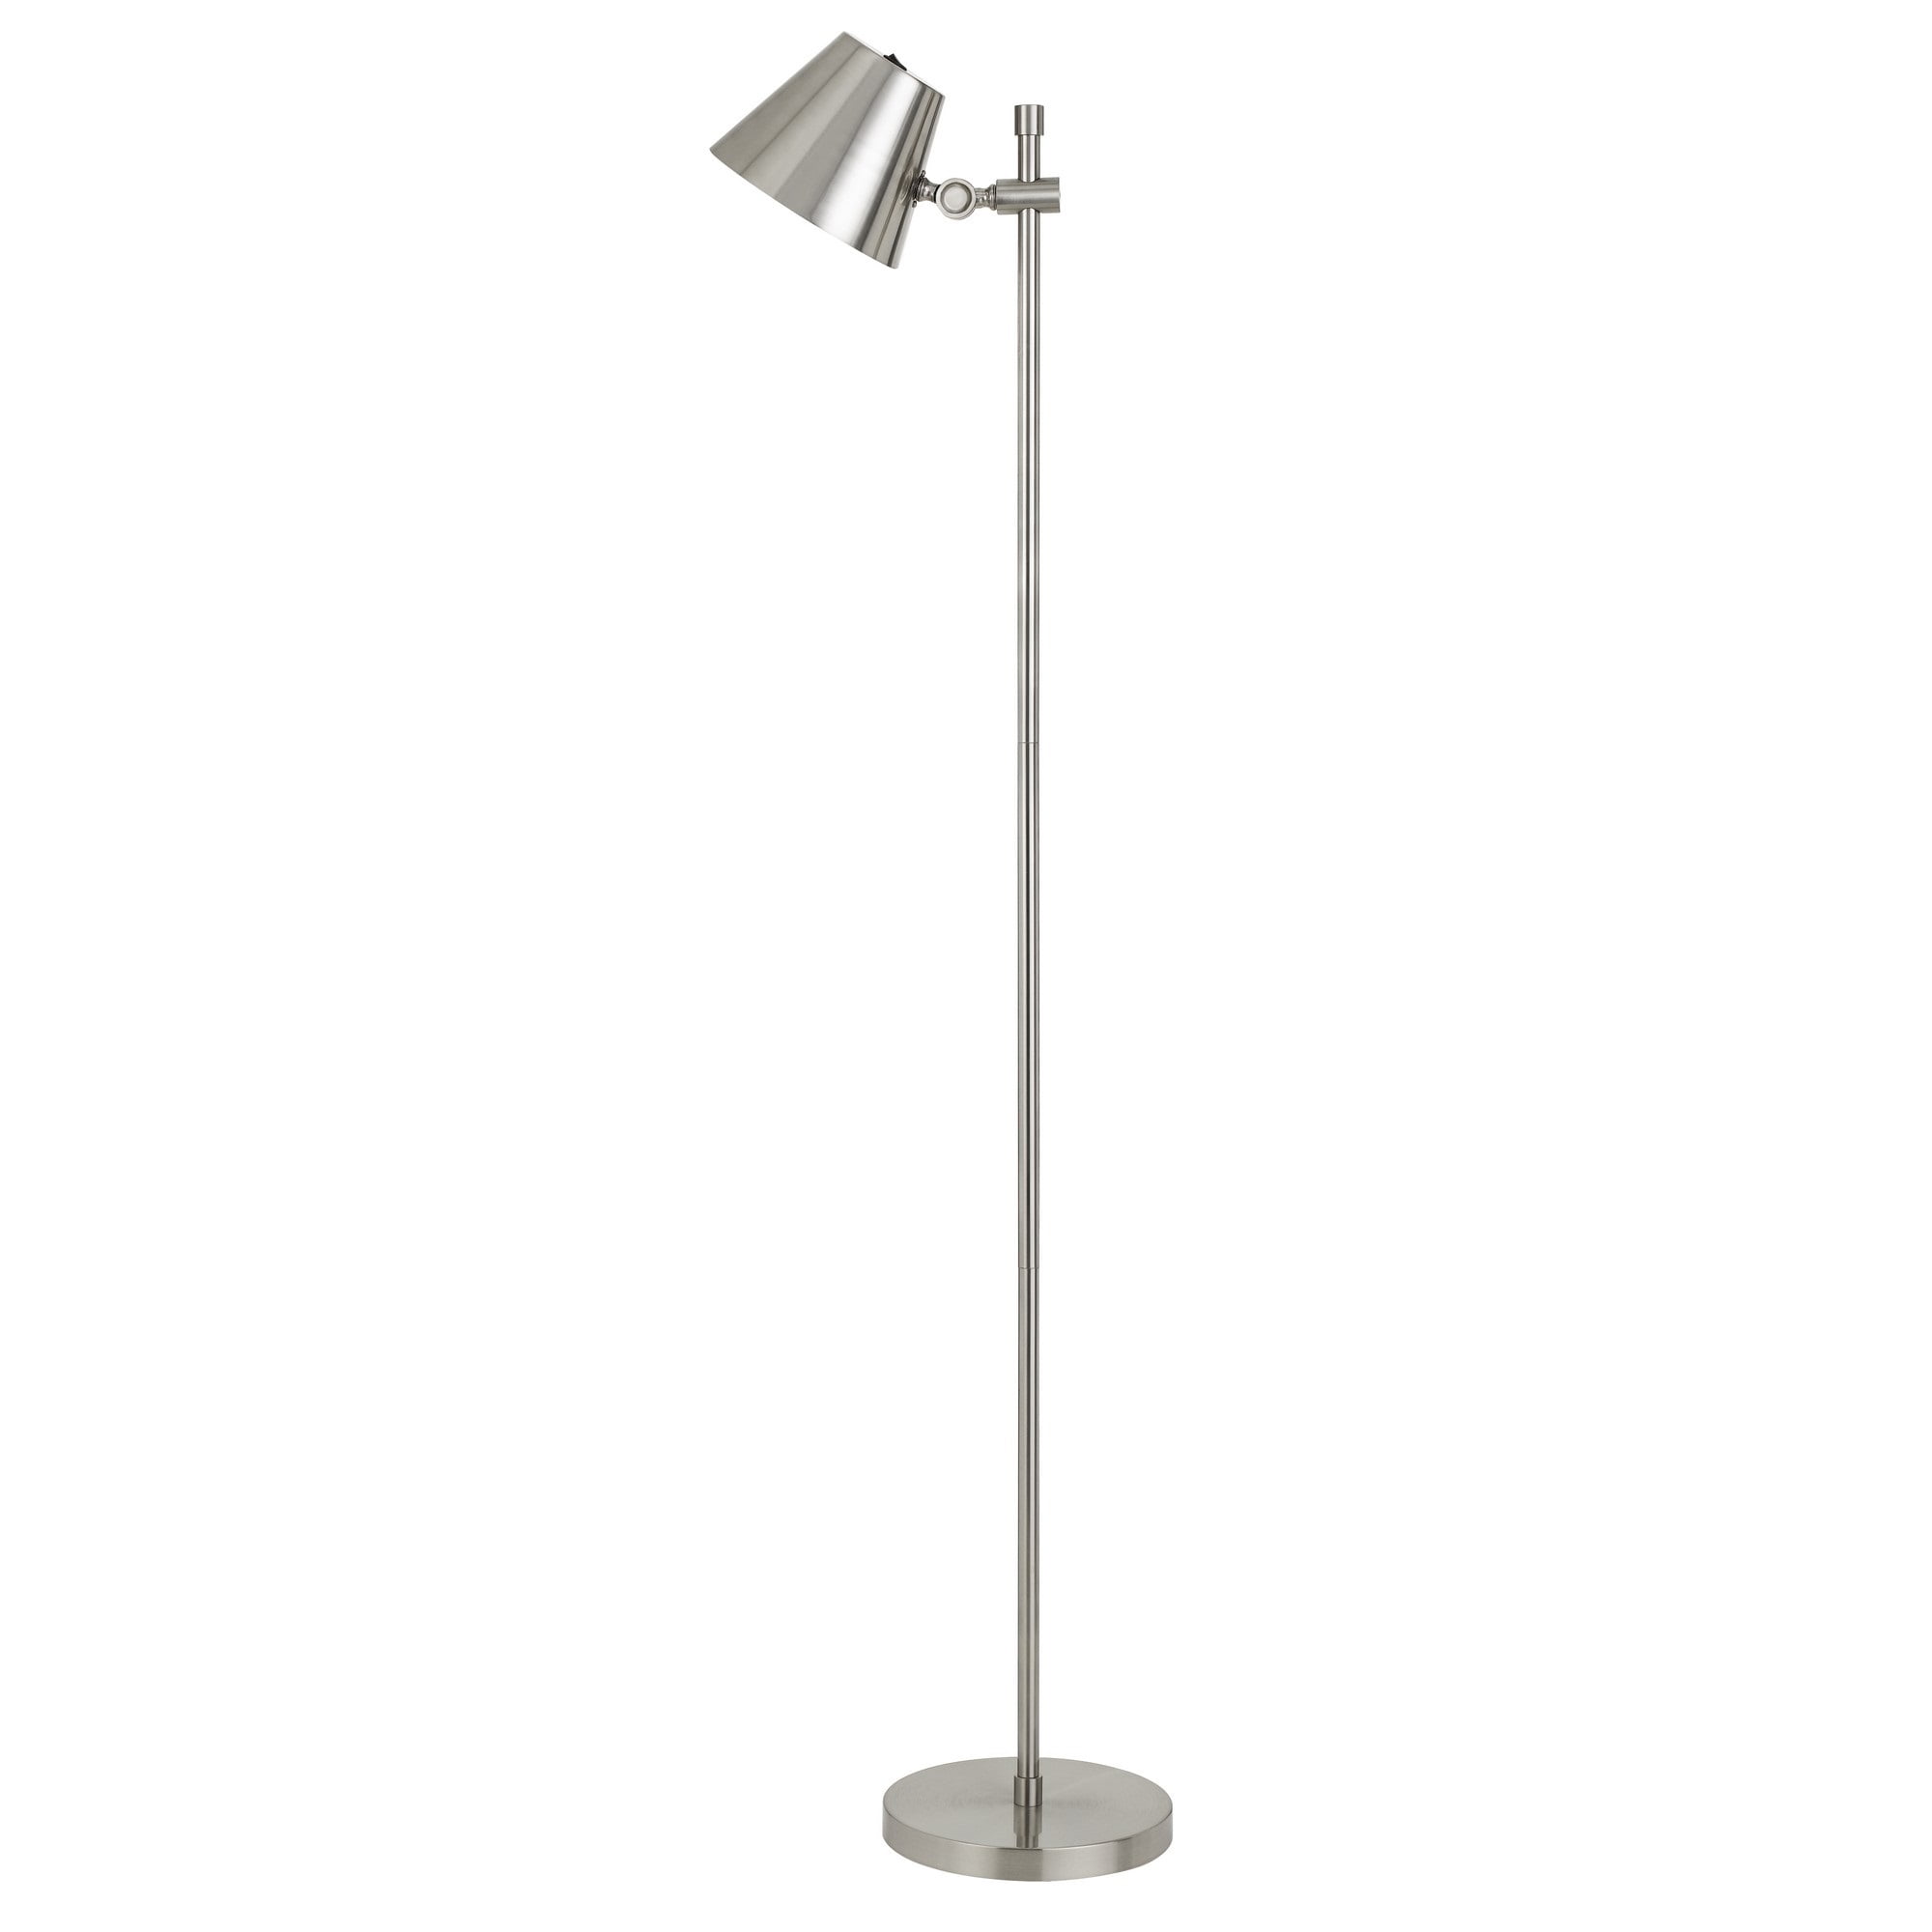 12 Watt LED Metal Frame Floor Lamp with Adjustable Head, Silver -  Walmart.com